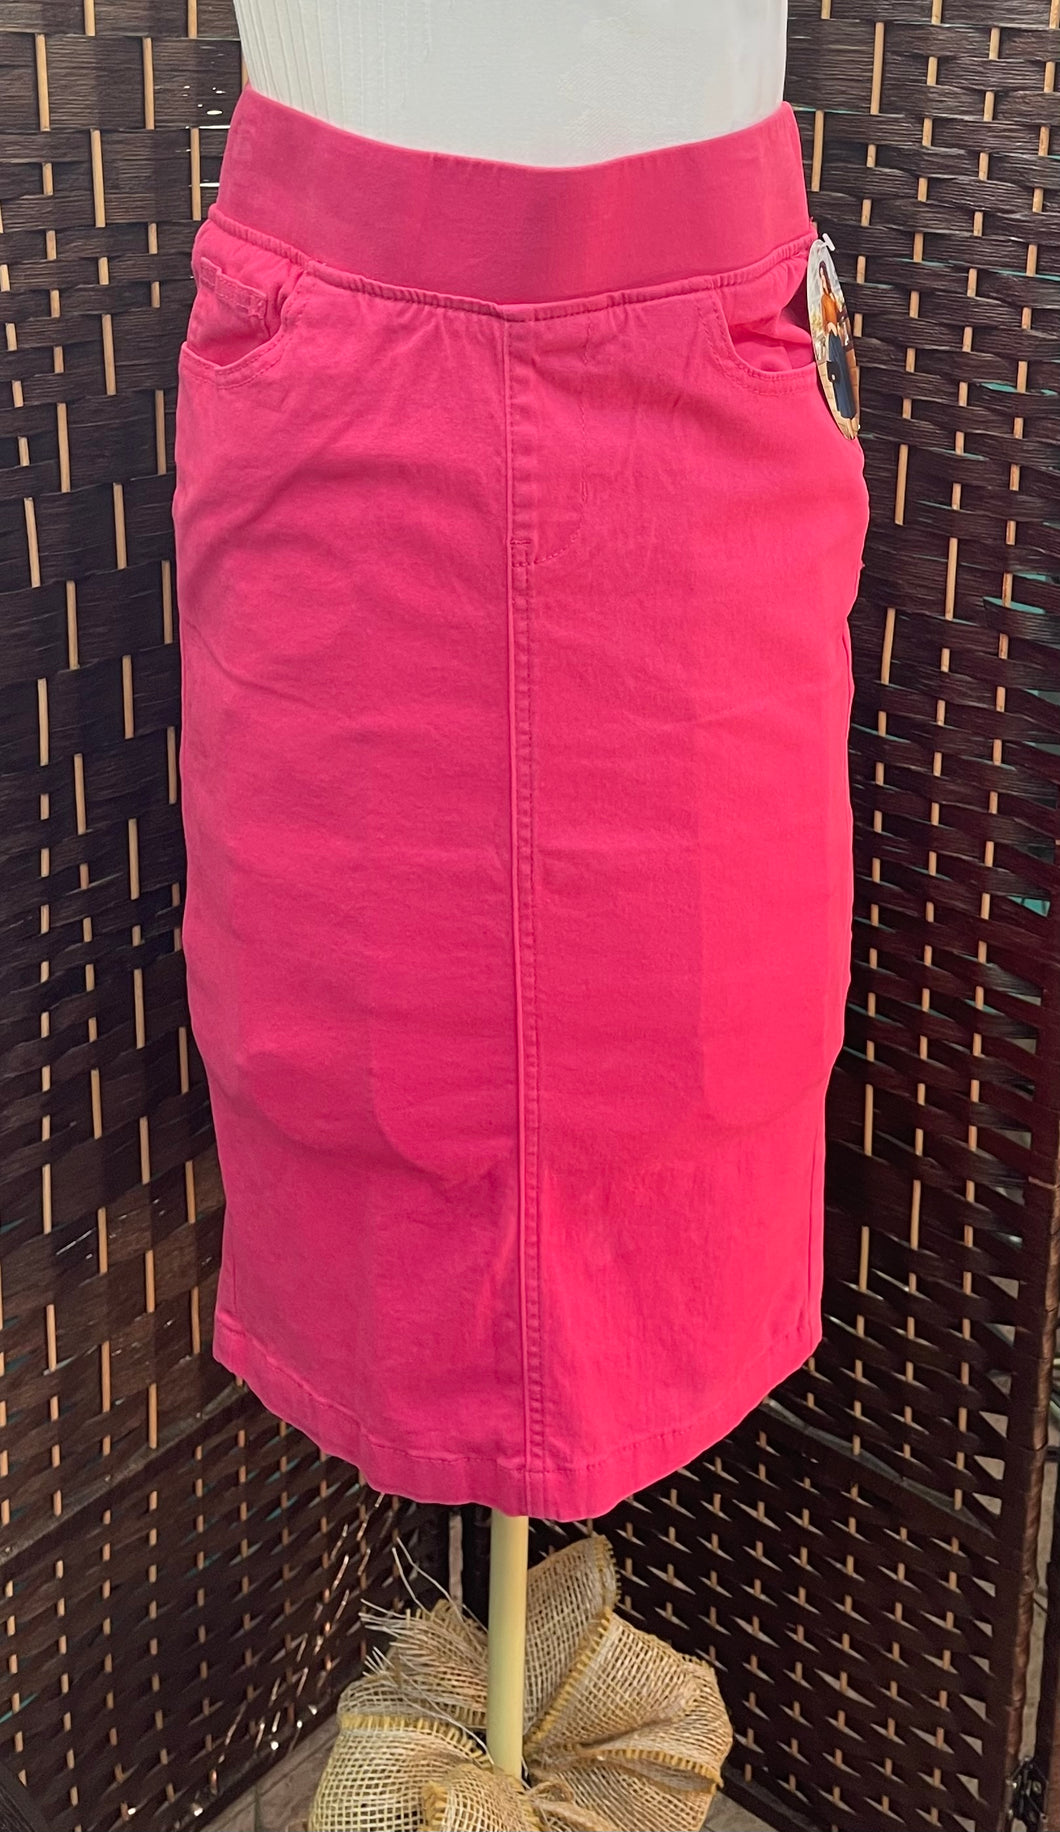 Wide Band Pink Denim Skirt